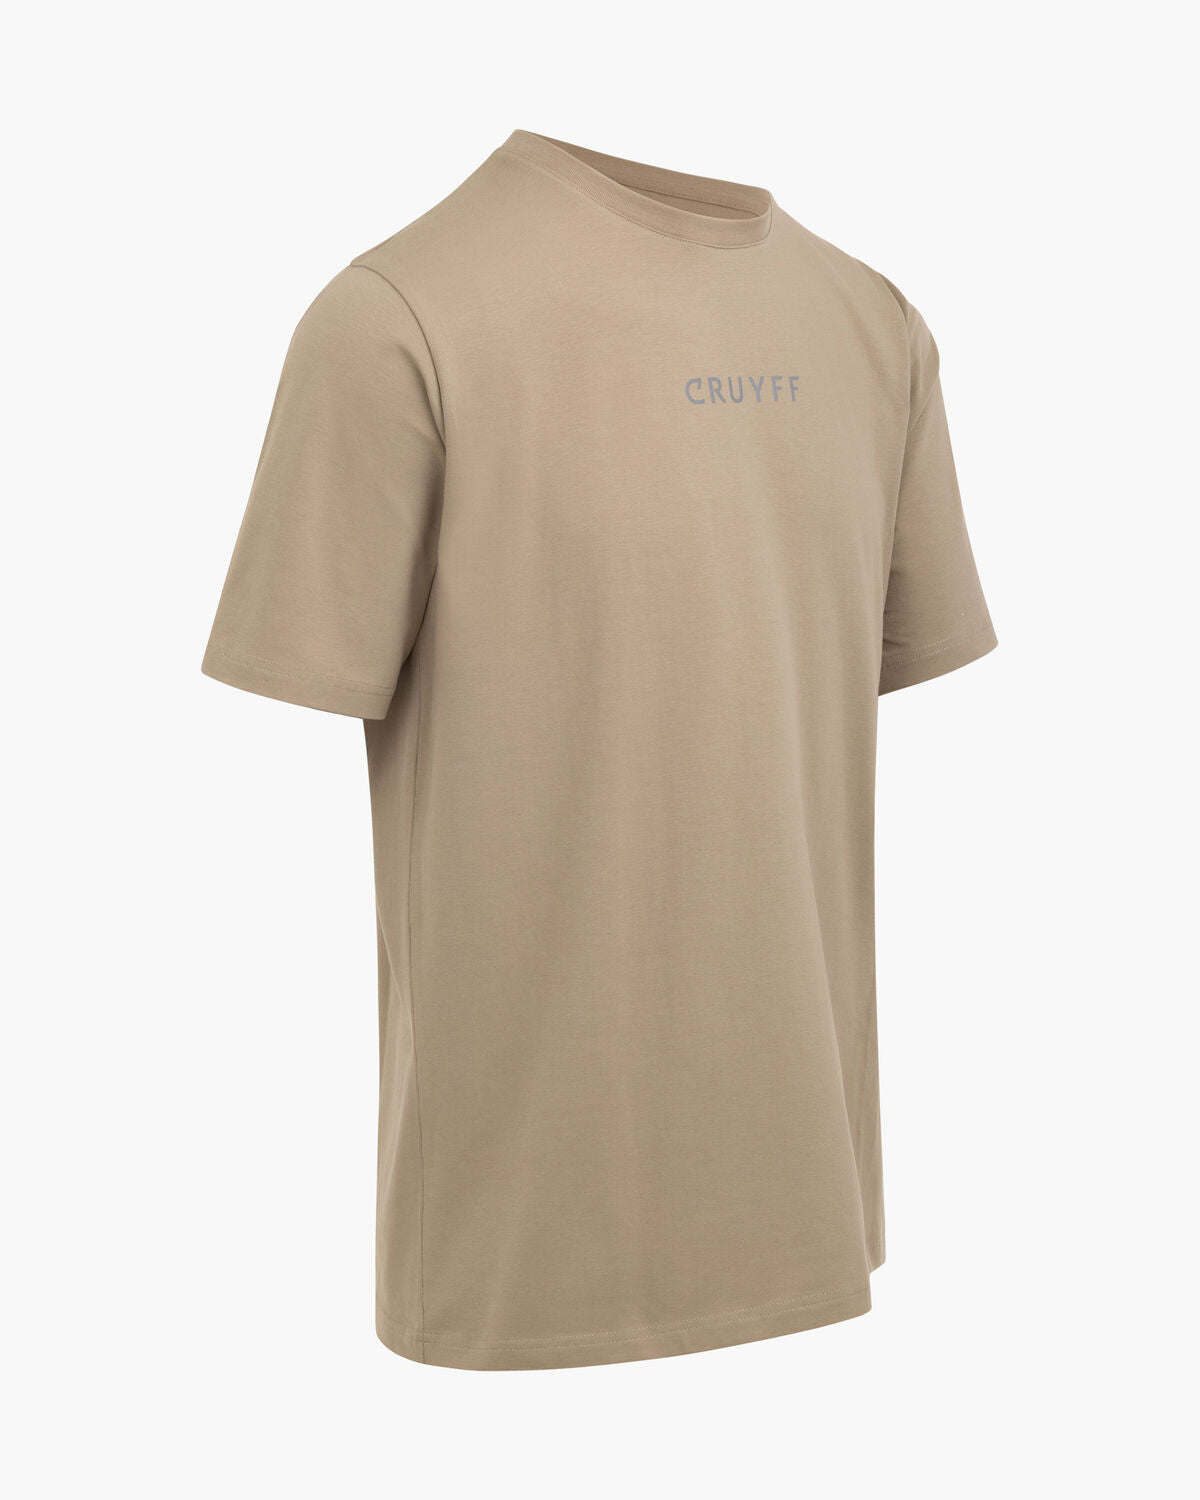 Cruyff Tiva T-Shirt Sand